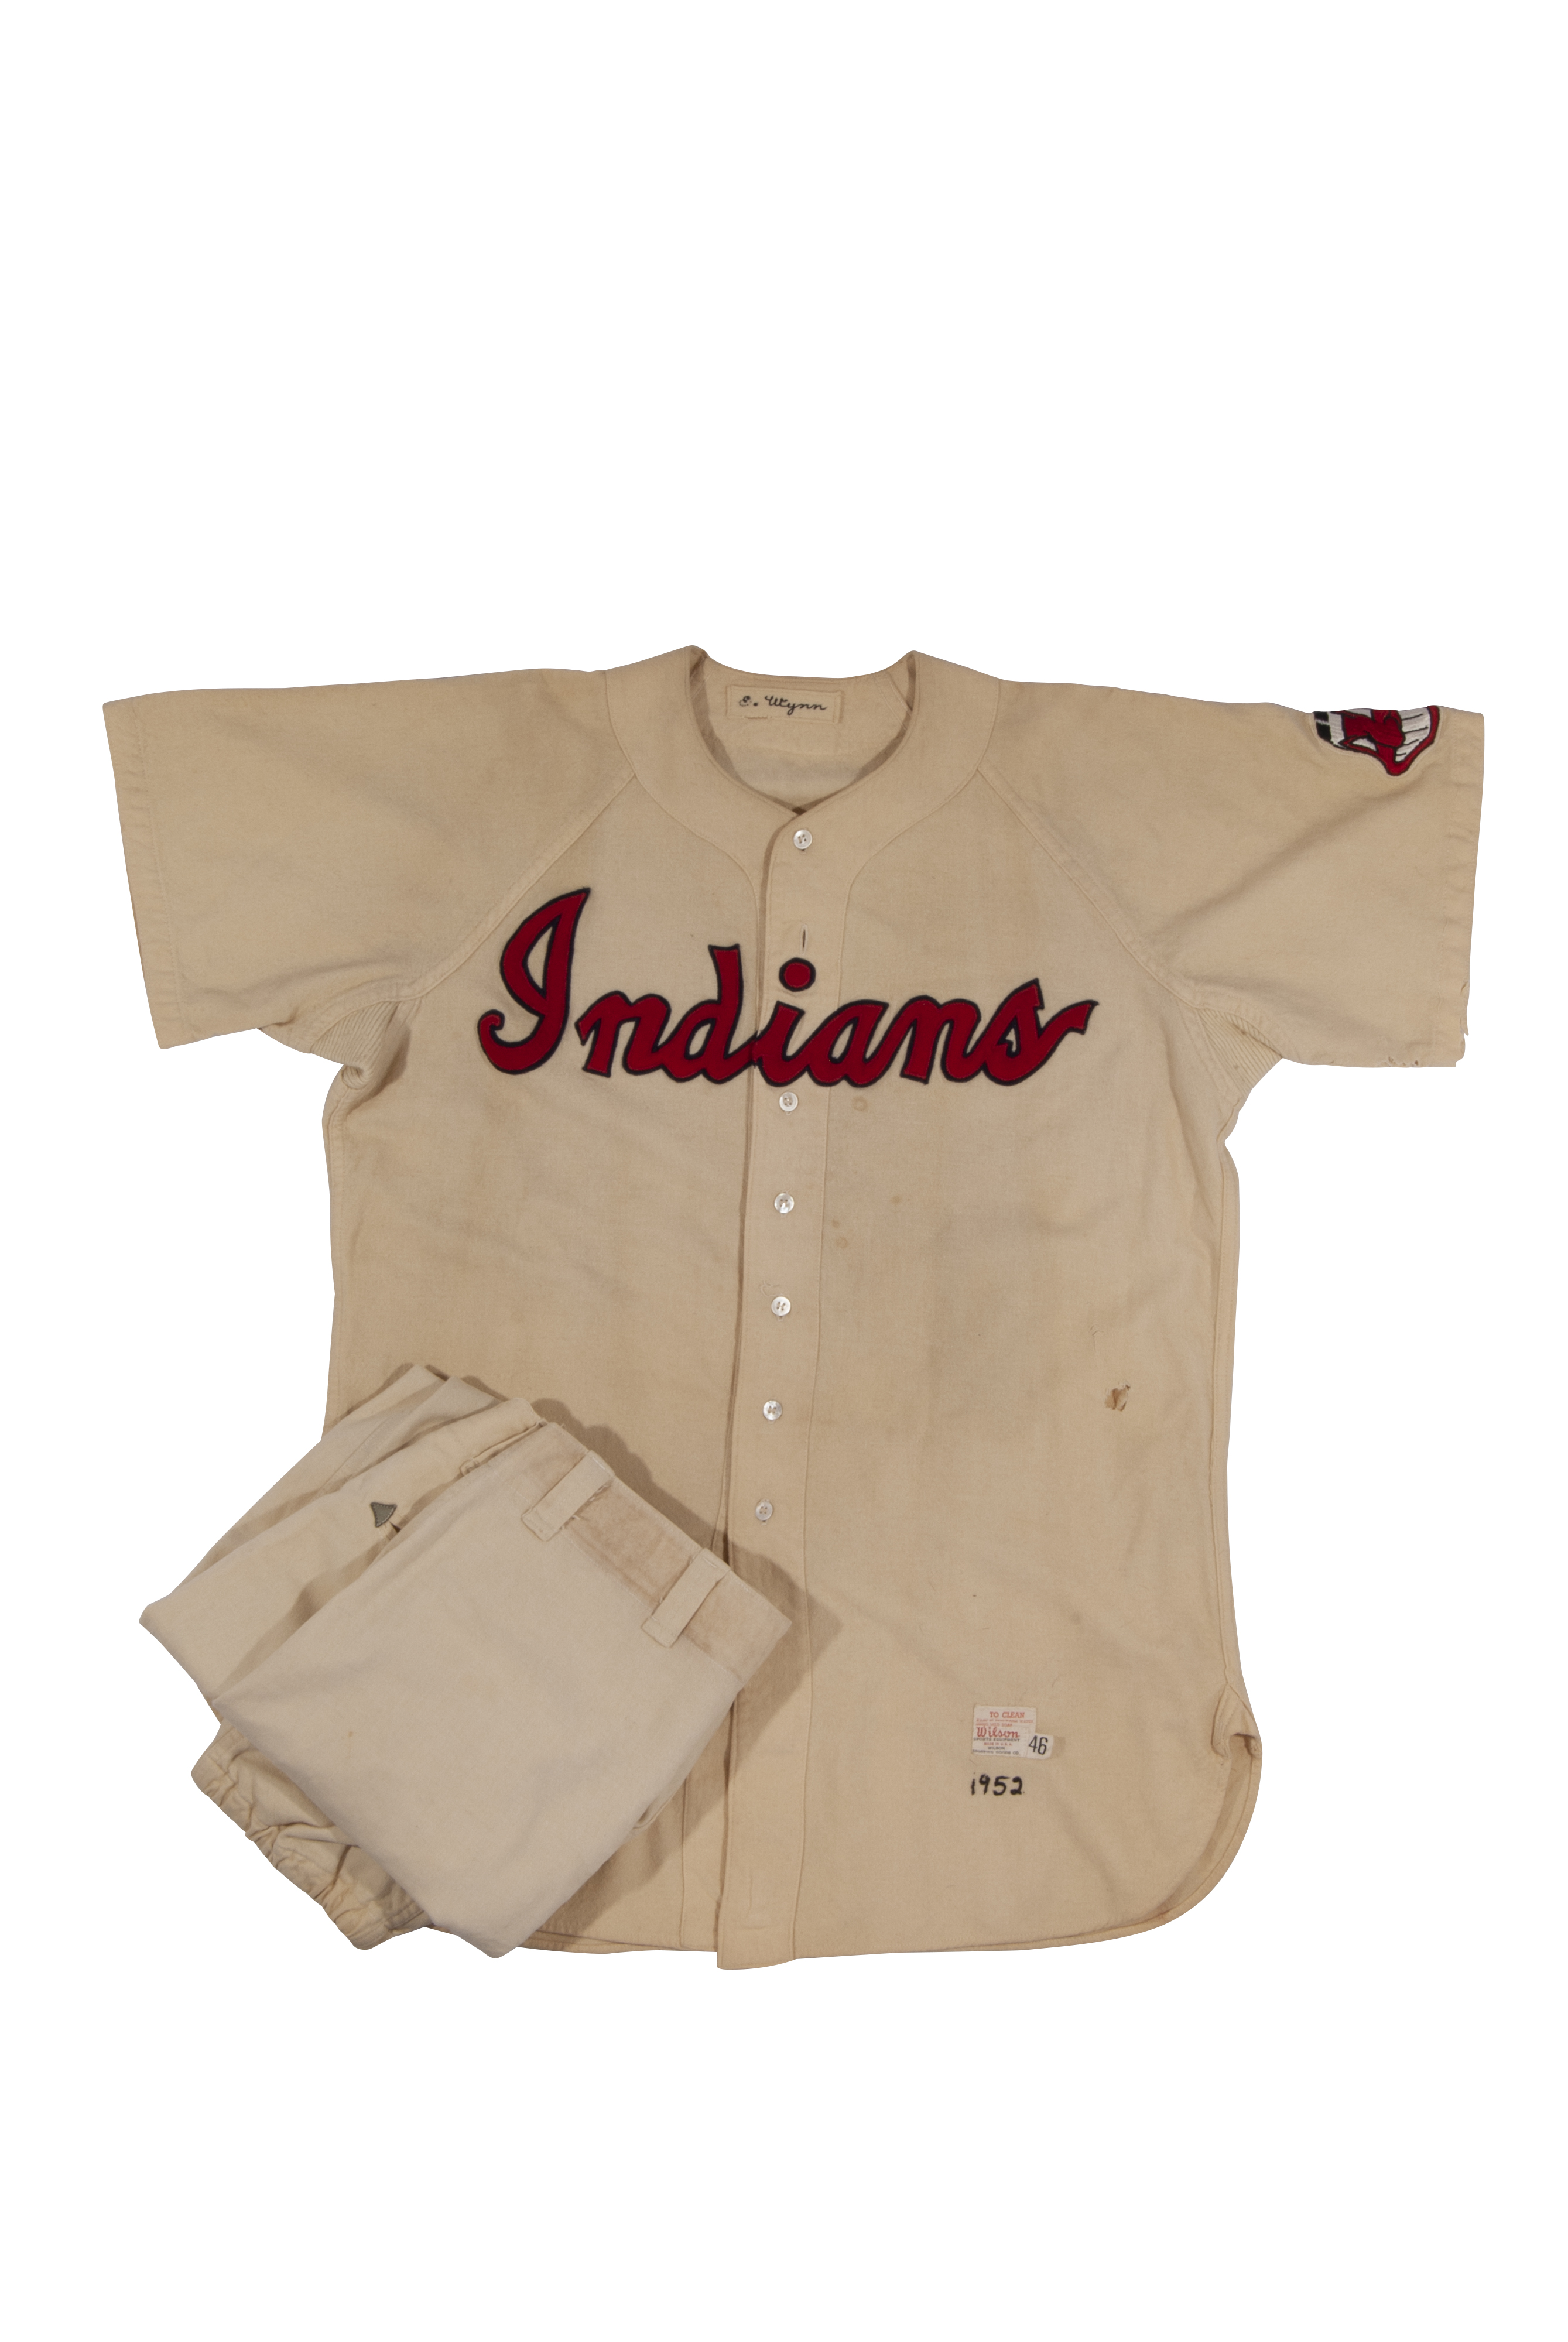 Vintage Cleveland Indians Chief Wahoo Starter White Pinstripe